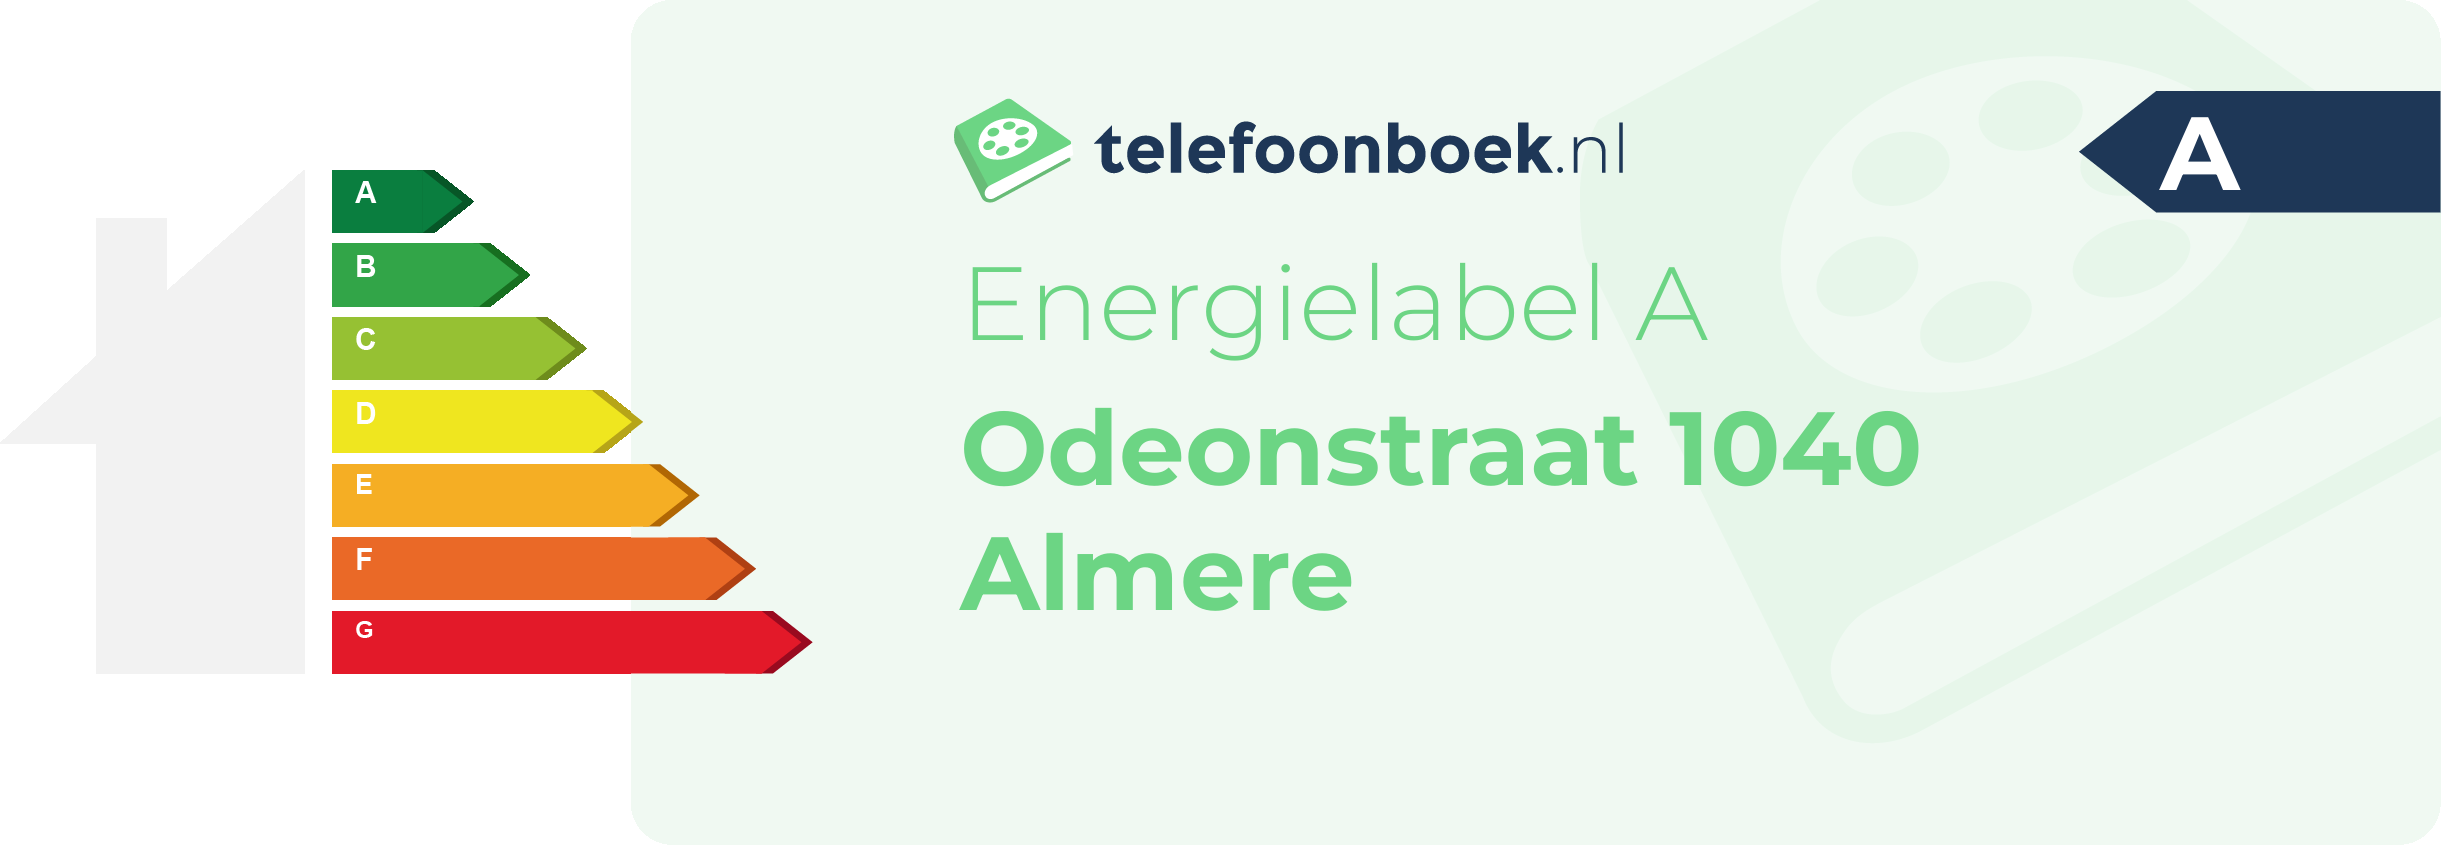 Energielabel Odeonstraat 1040 Almere